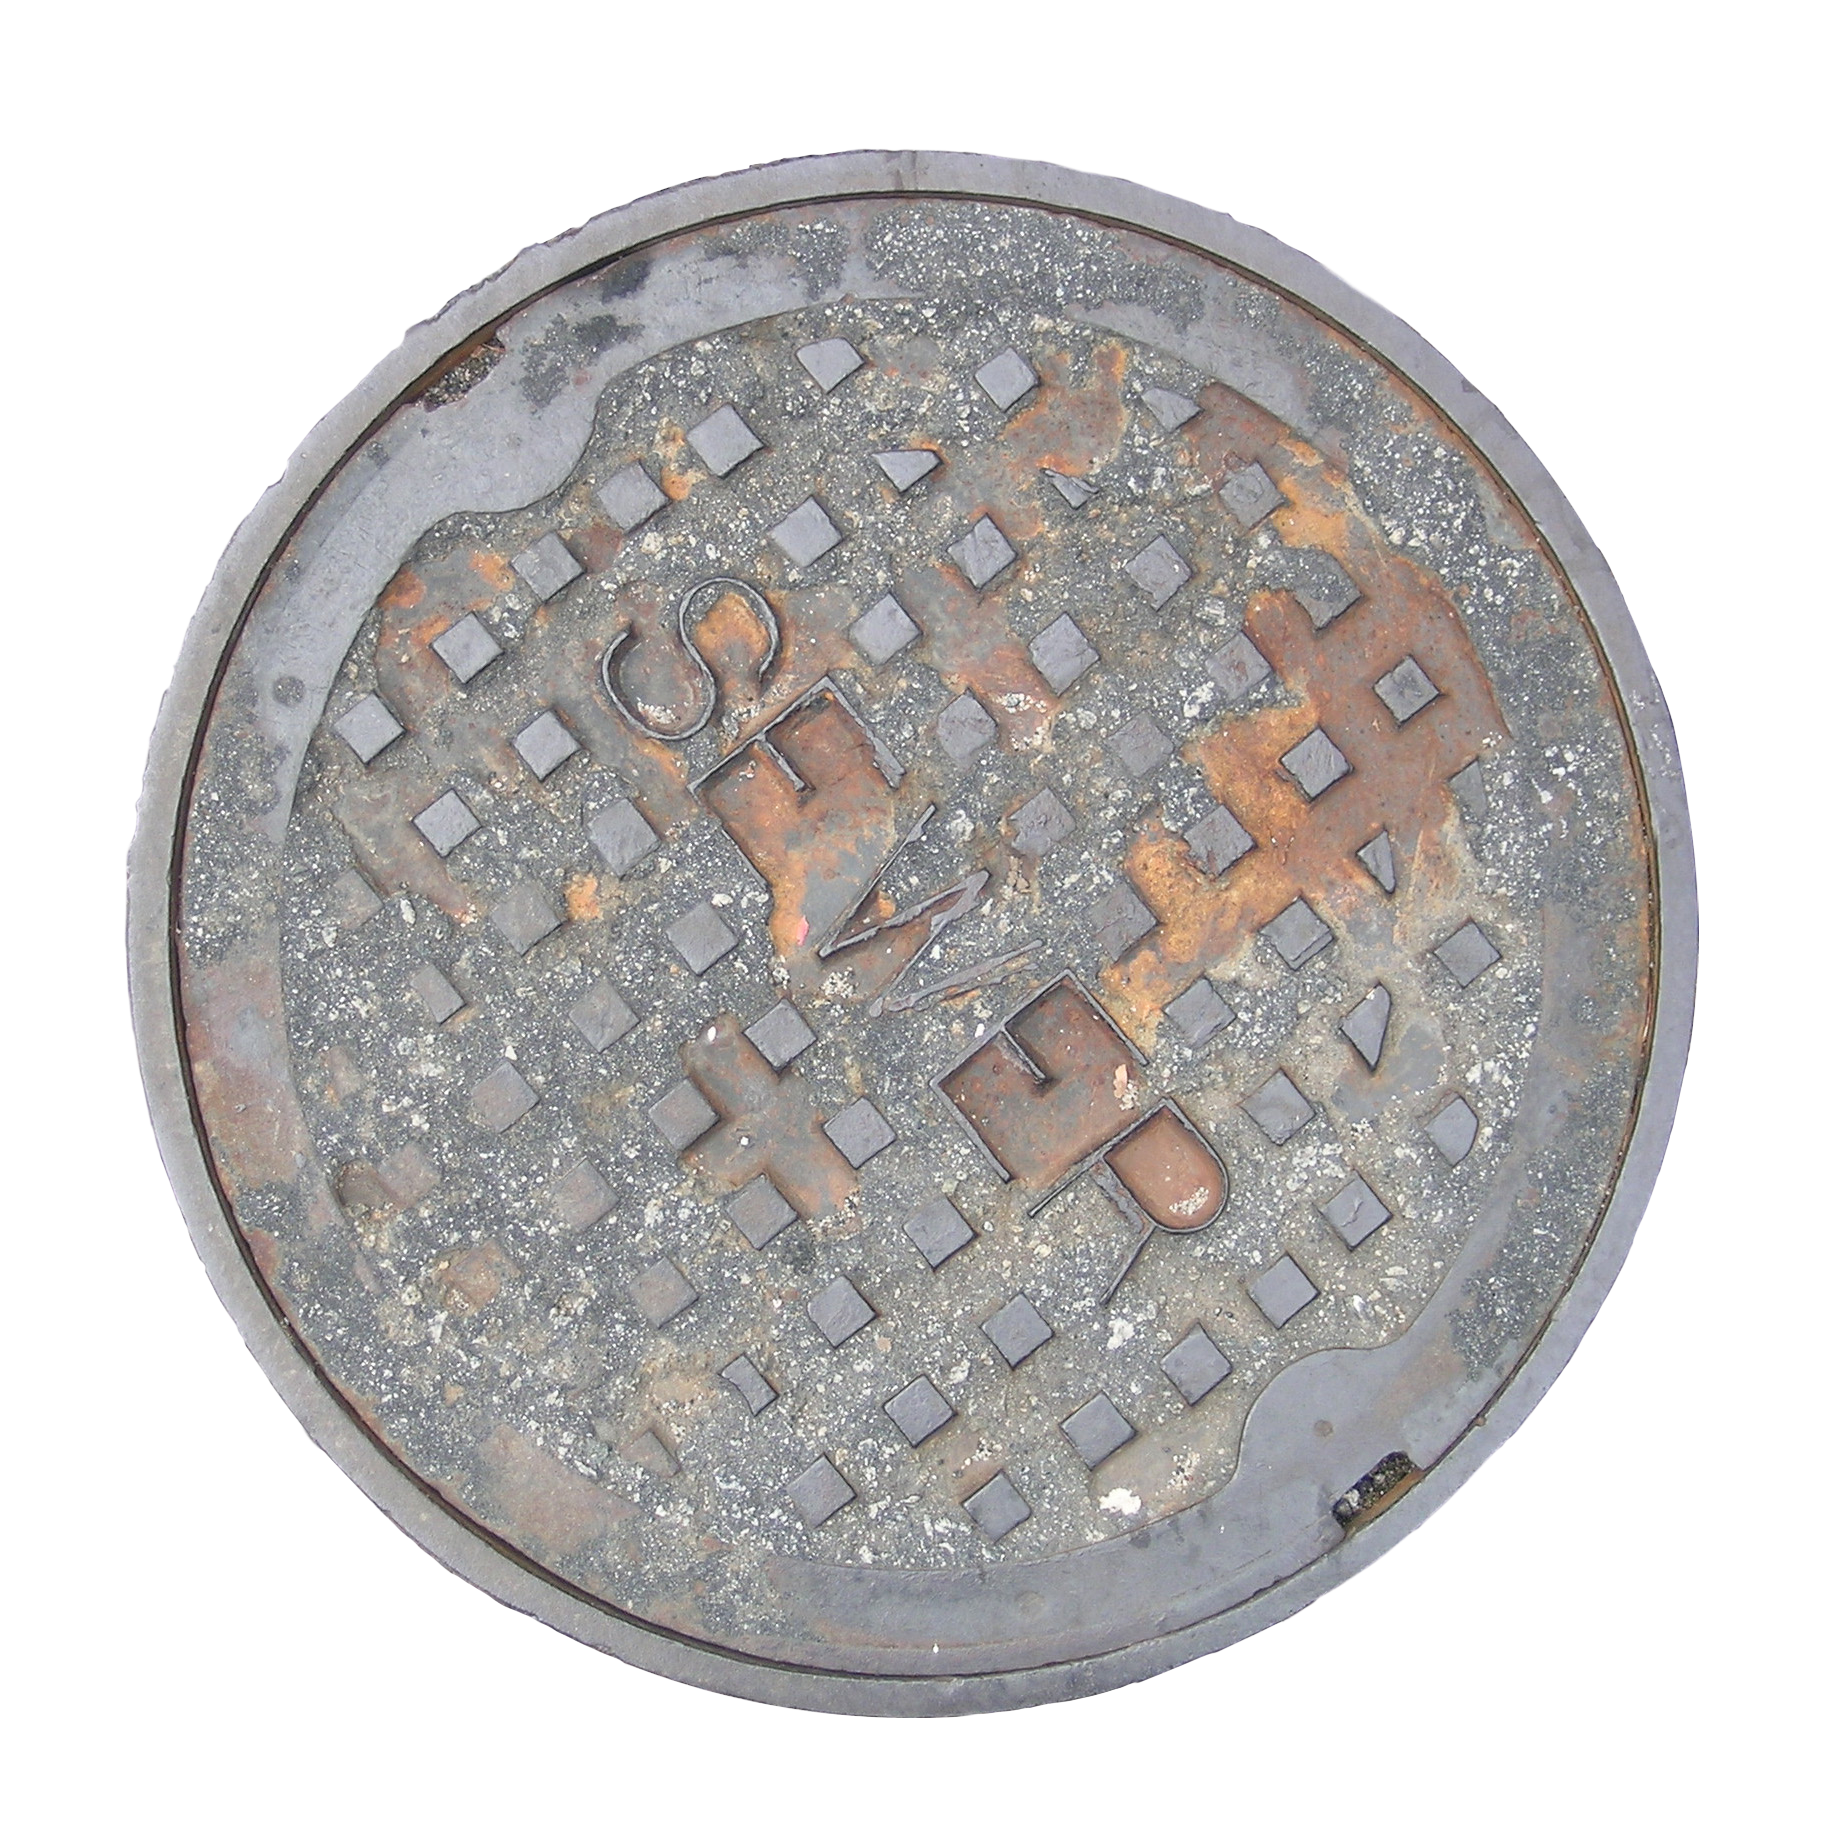 Huge round. Канализационный люк текстура. Manhole 3d. Sewer texture. Manhole texture.